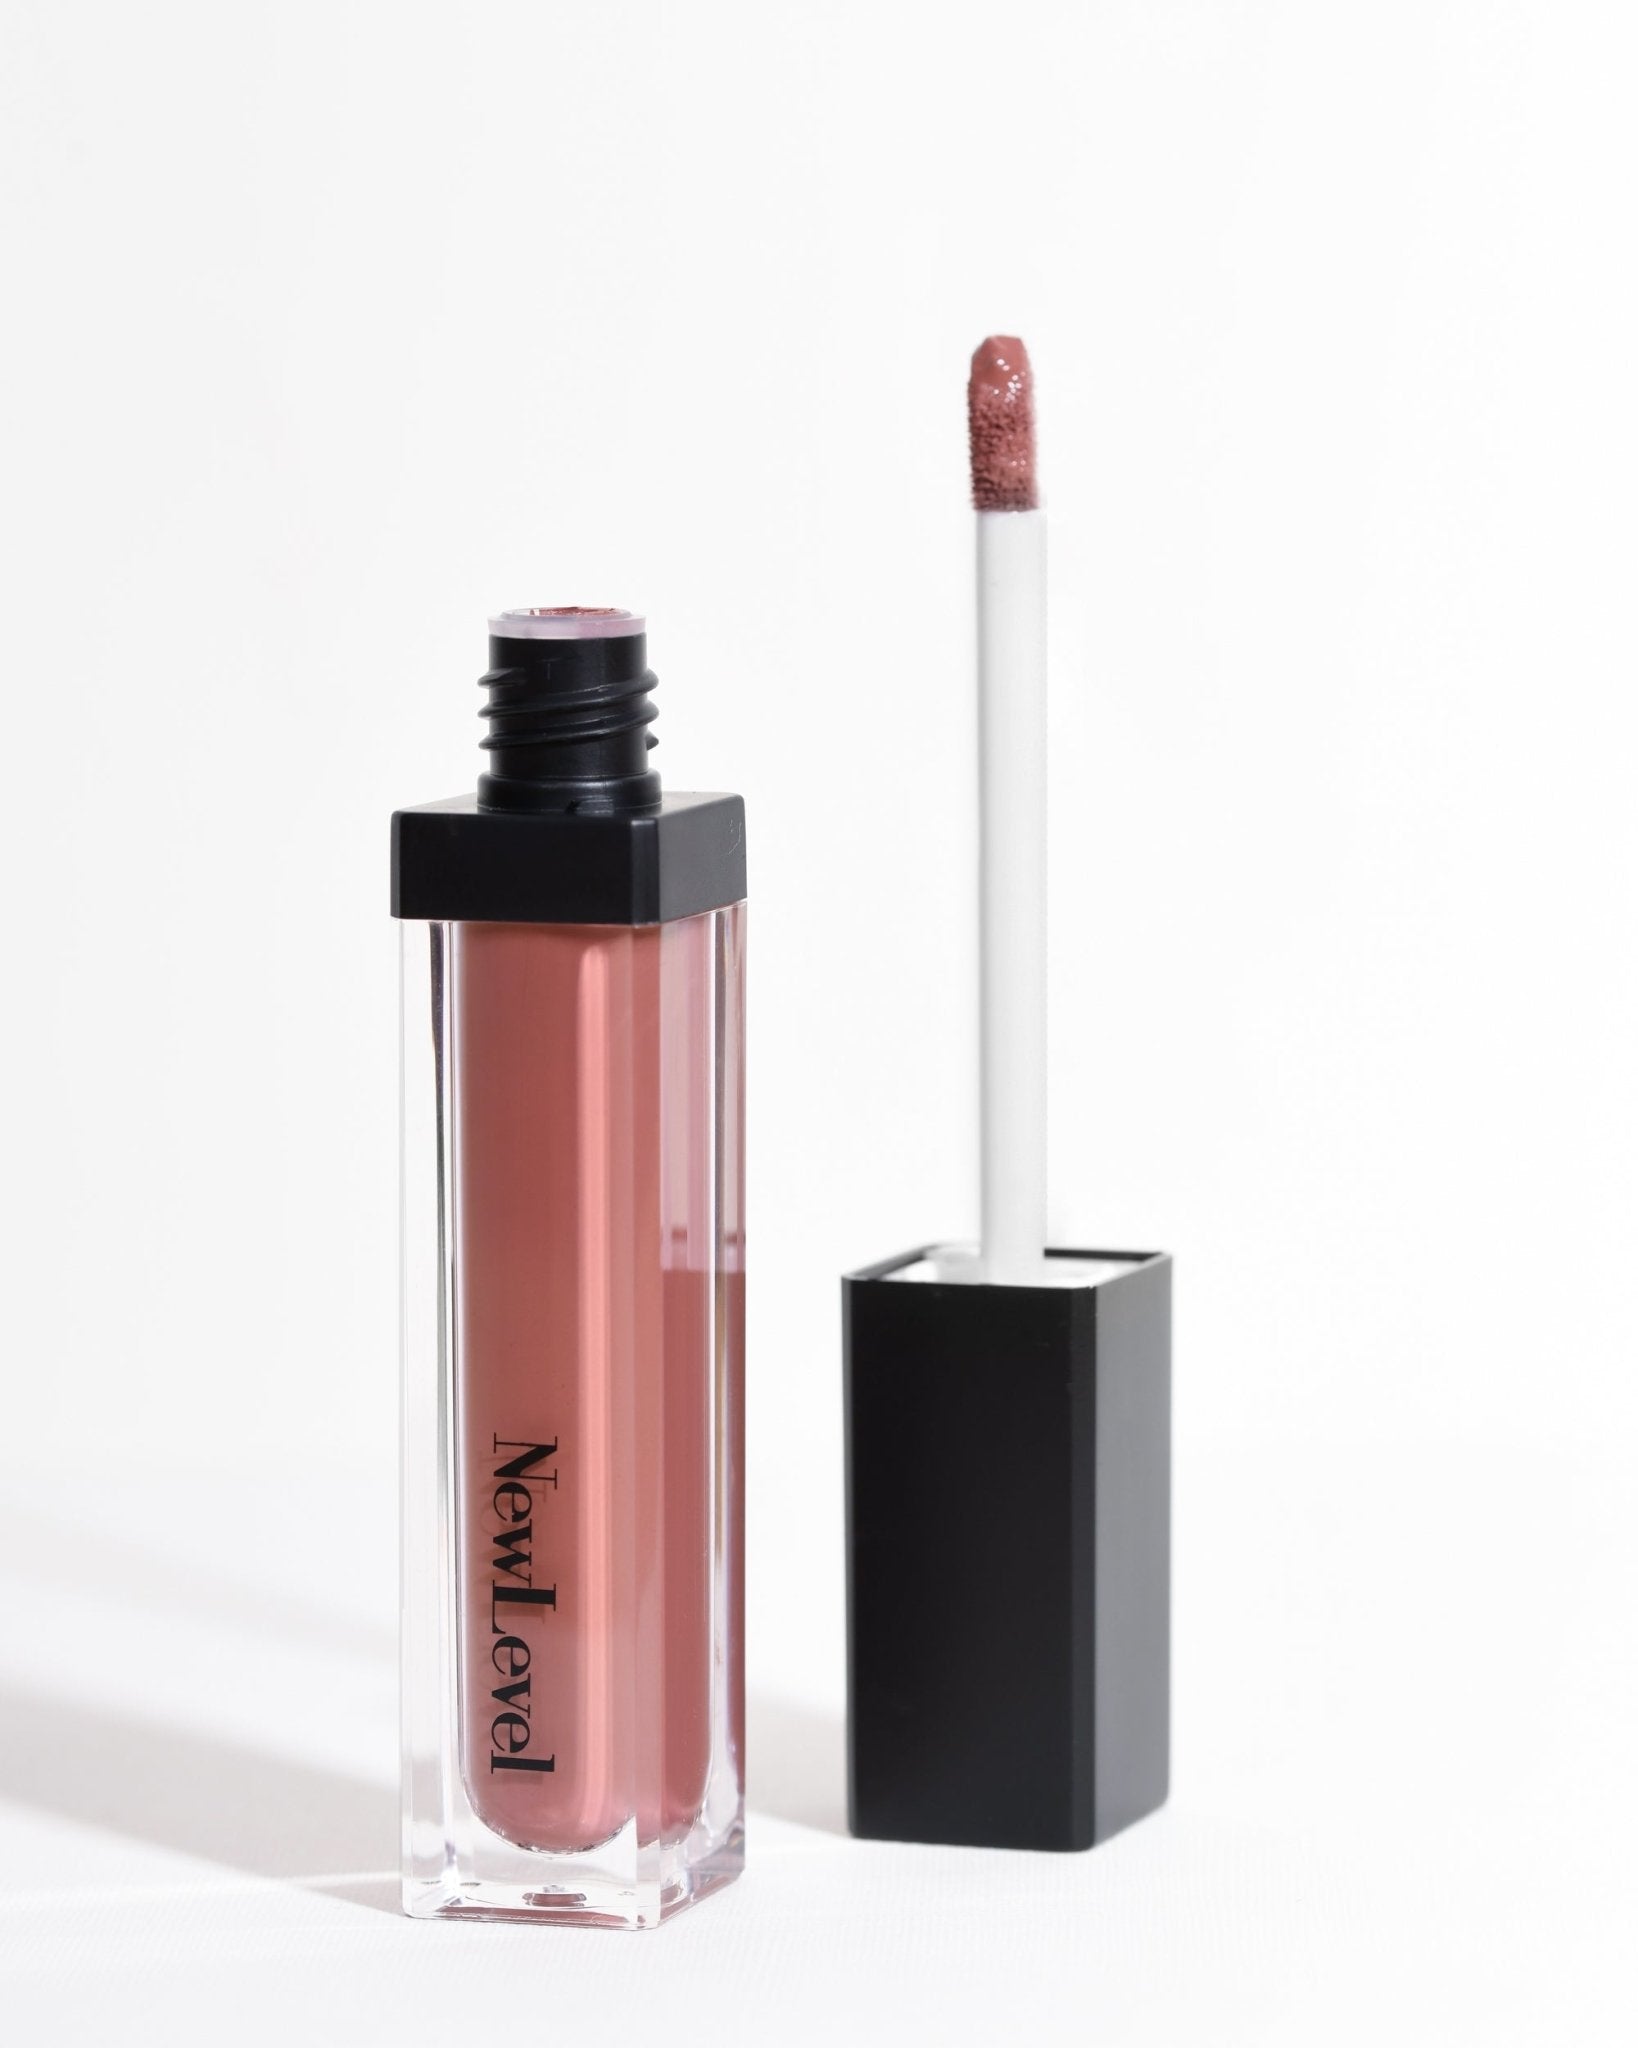 Send Nudes velvet Matte Liquid Lipstick - New Level